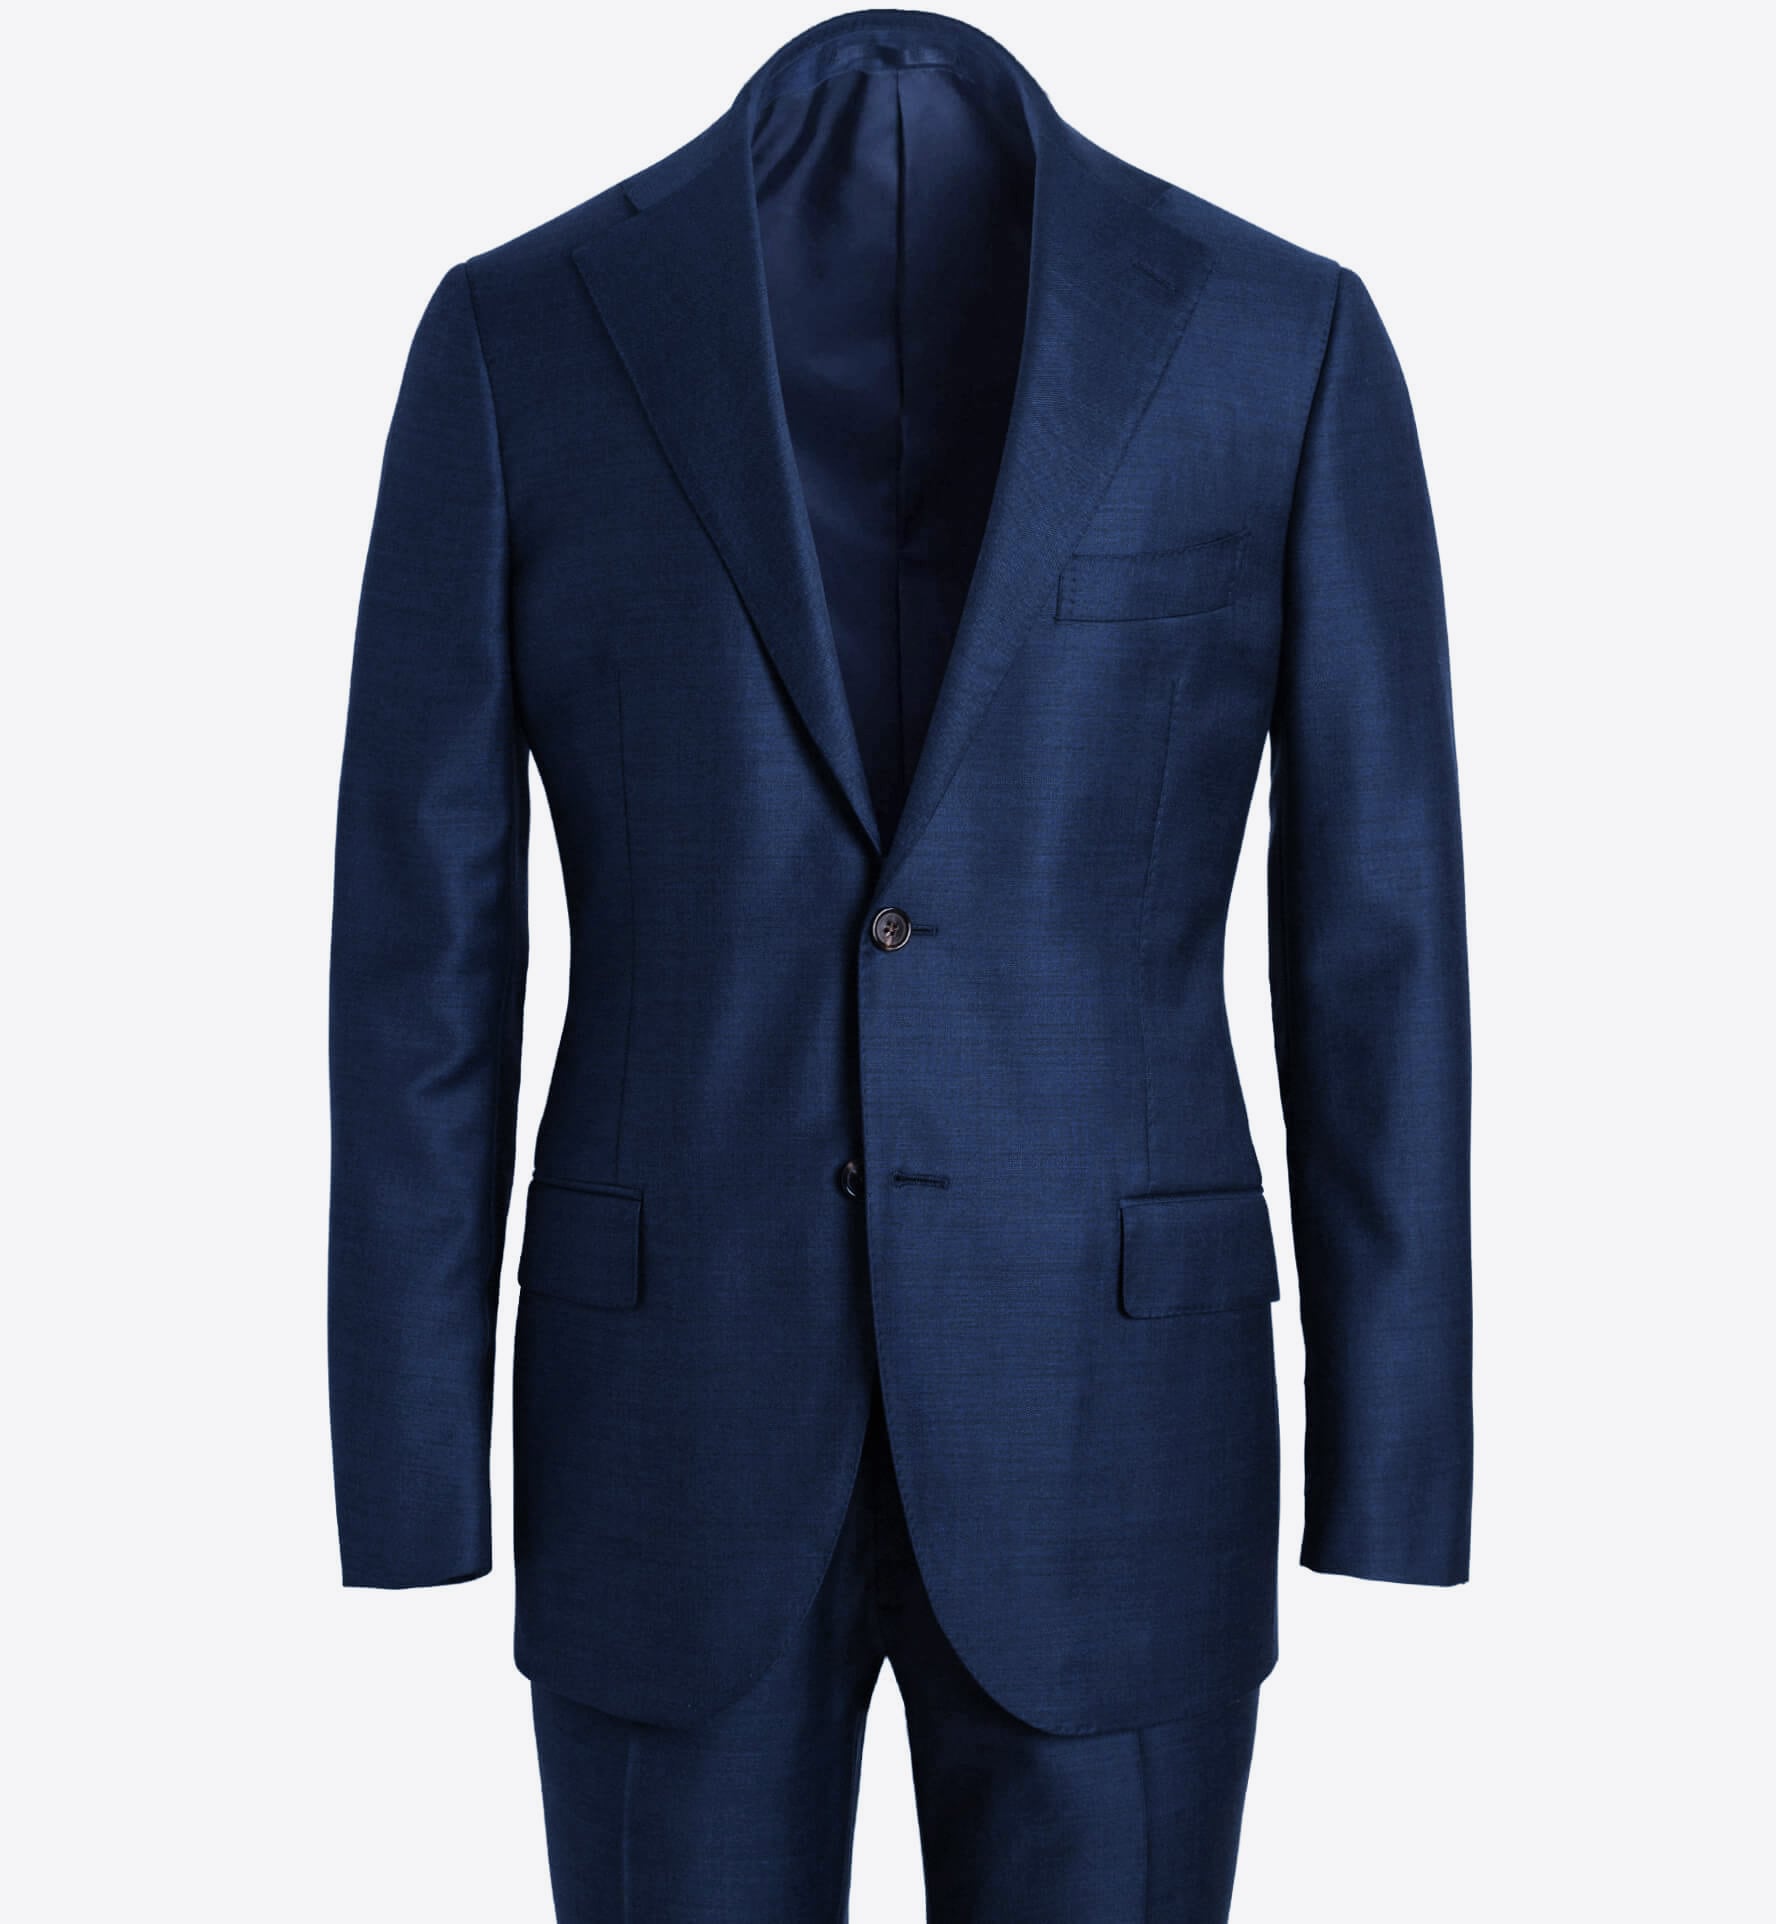 Allen Blue S110s Sharkskin Suit - Custom Fit Tailored Clothing